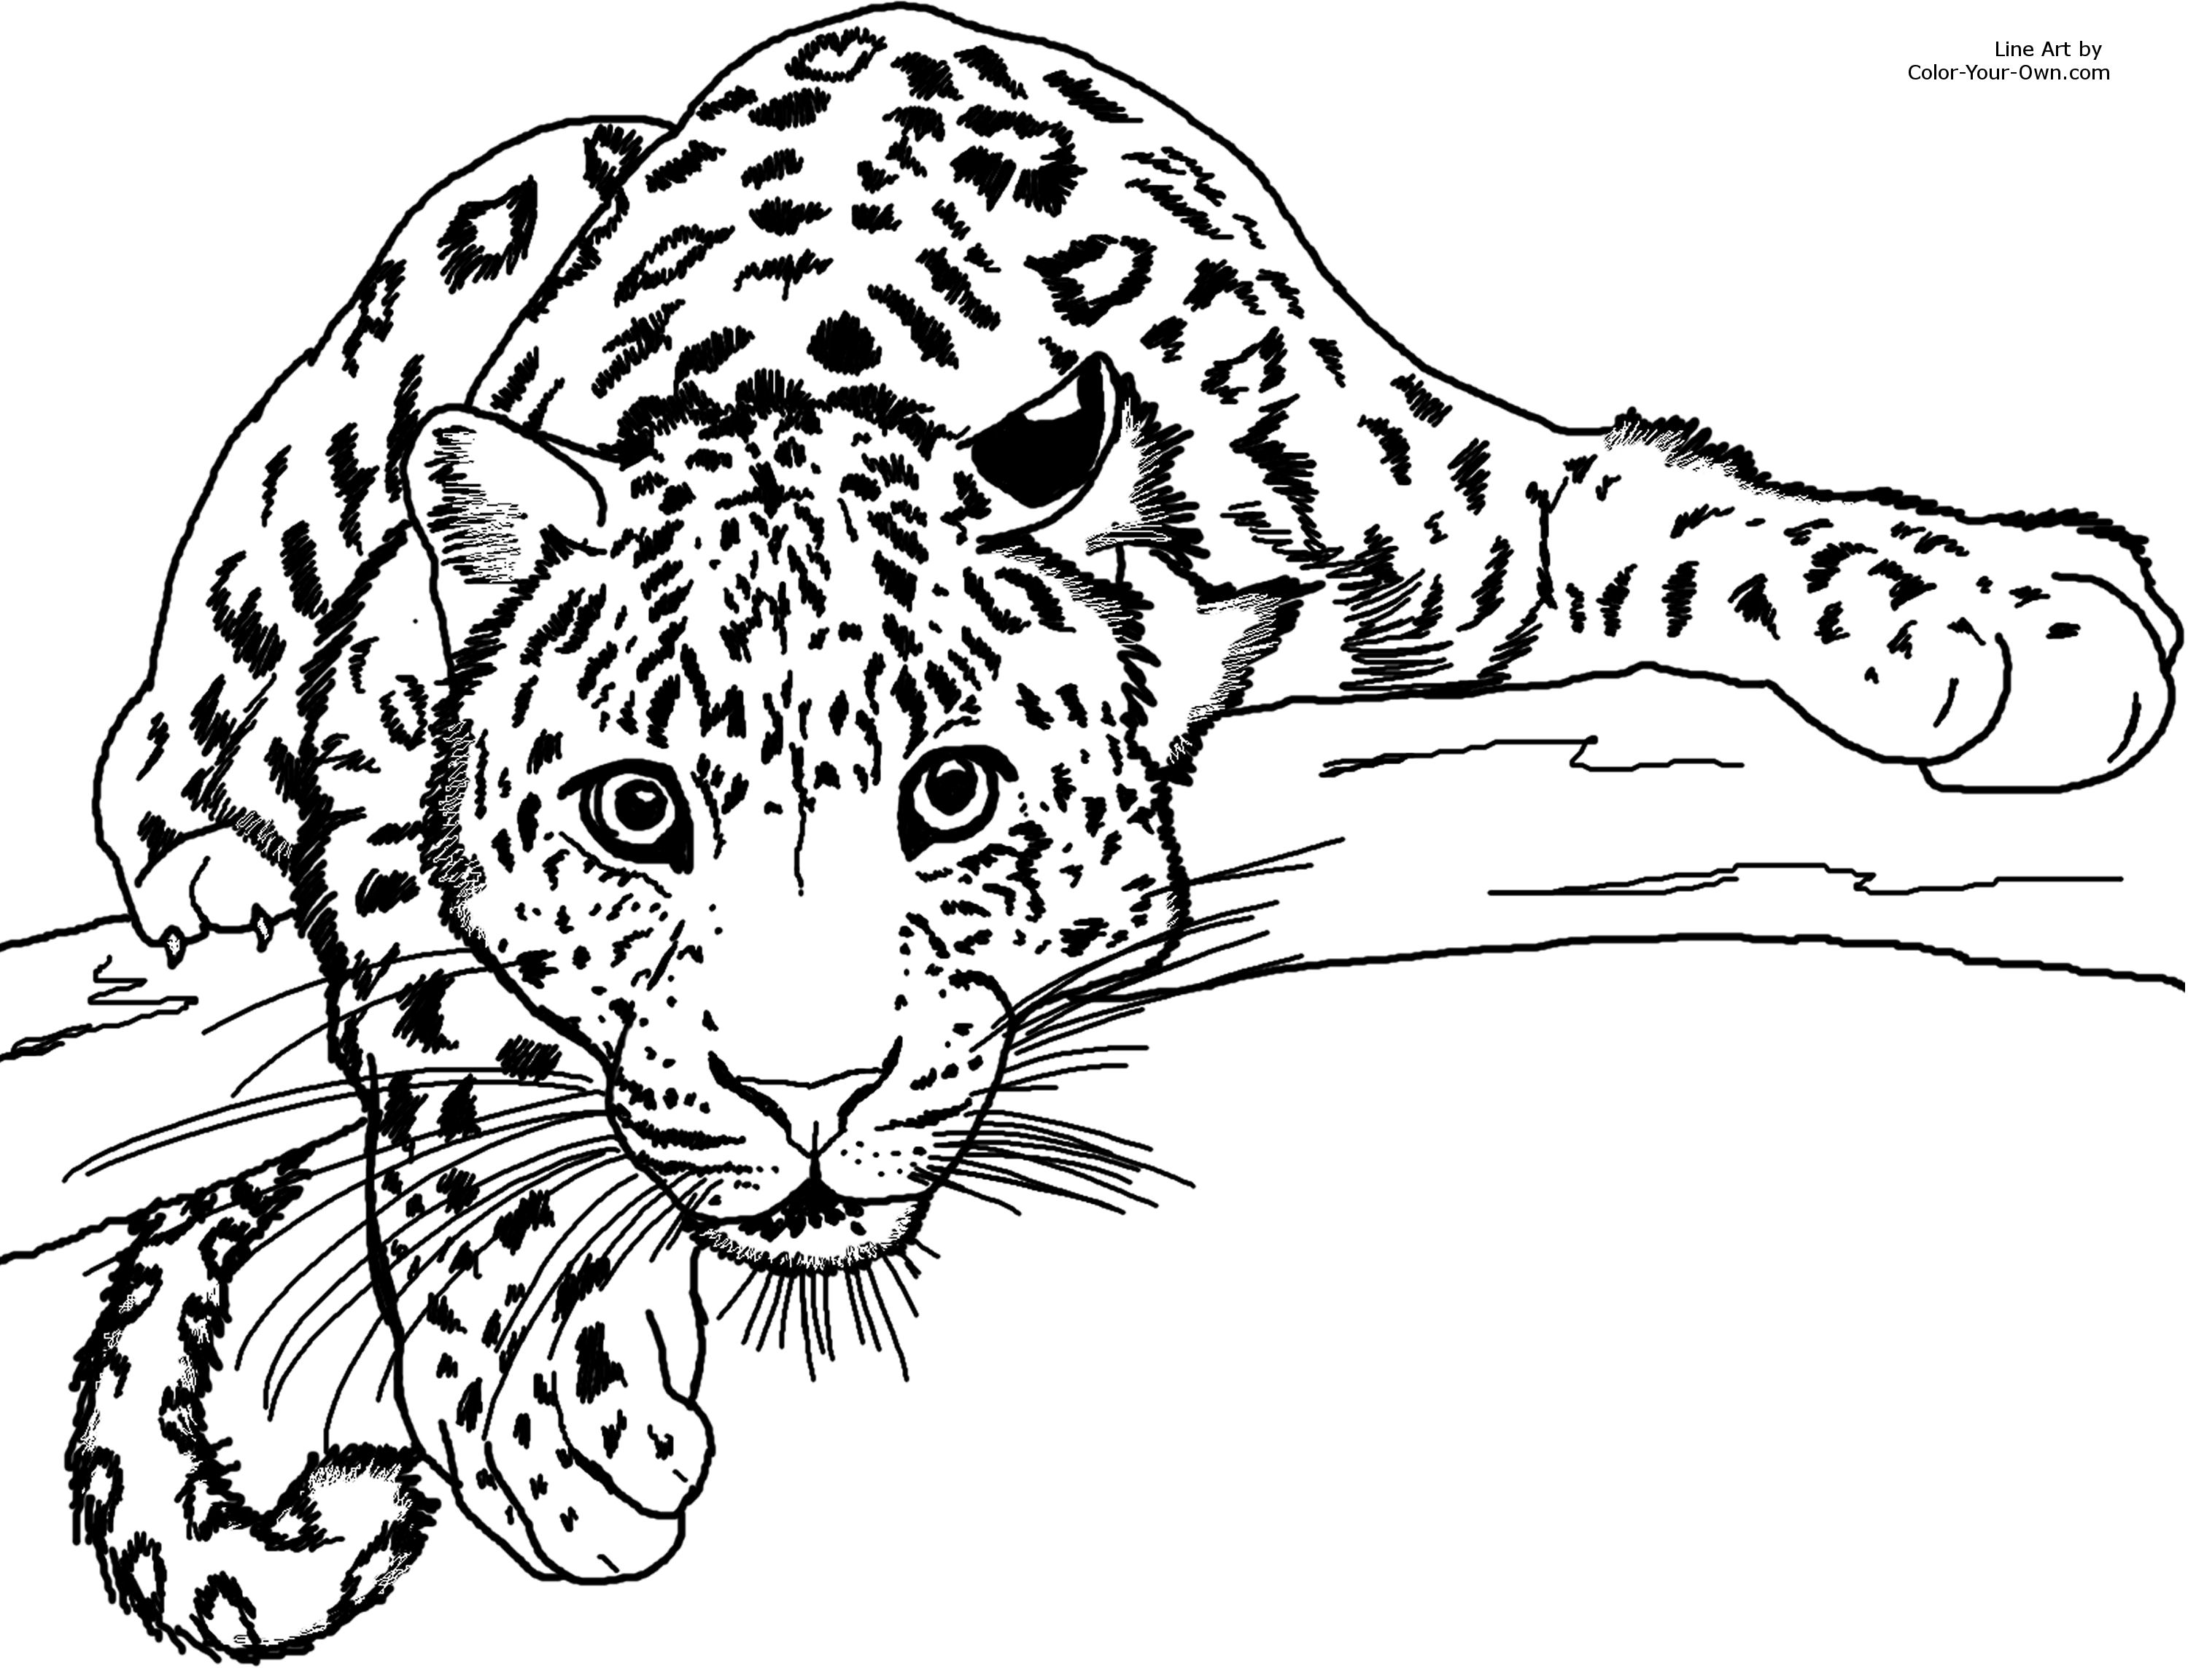 Amur Leopard coloring #14, Download drawings